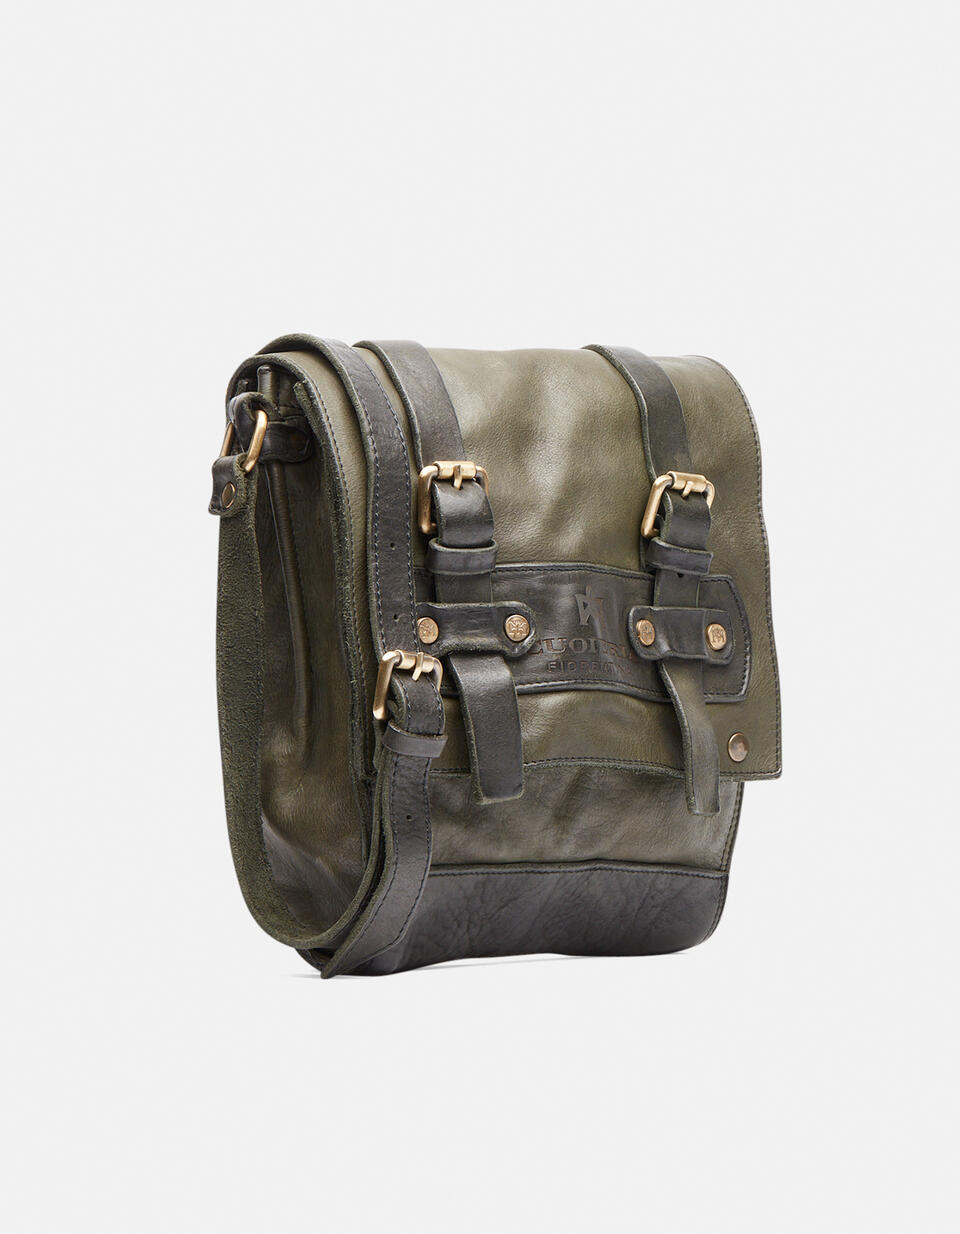 Millennial bag in natural leather - Crossbody Bags - MEN'S BAGS | bags FORESTA - Crossbody Bags - MEN'S BAGS | bagsCuoieria Fiorentina